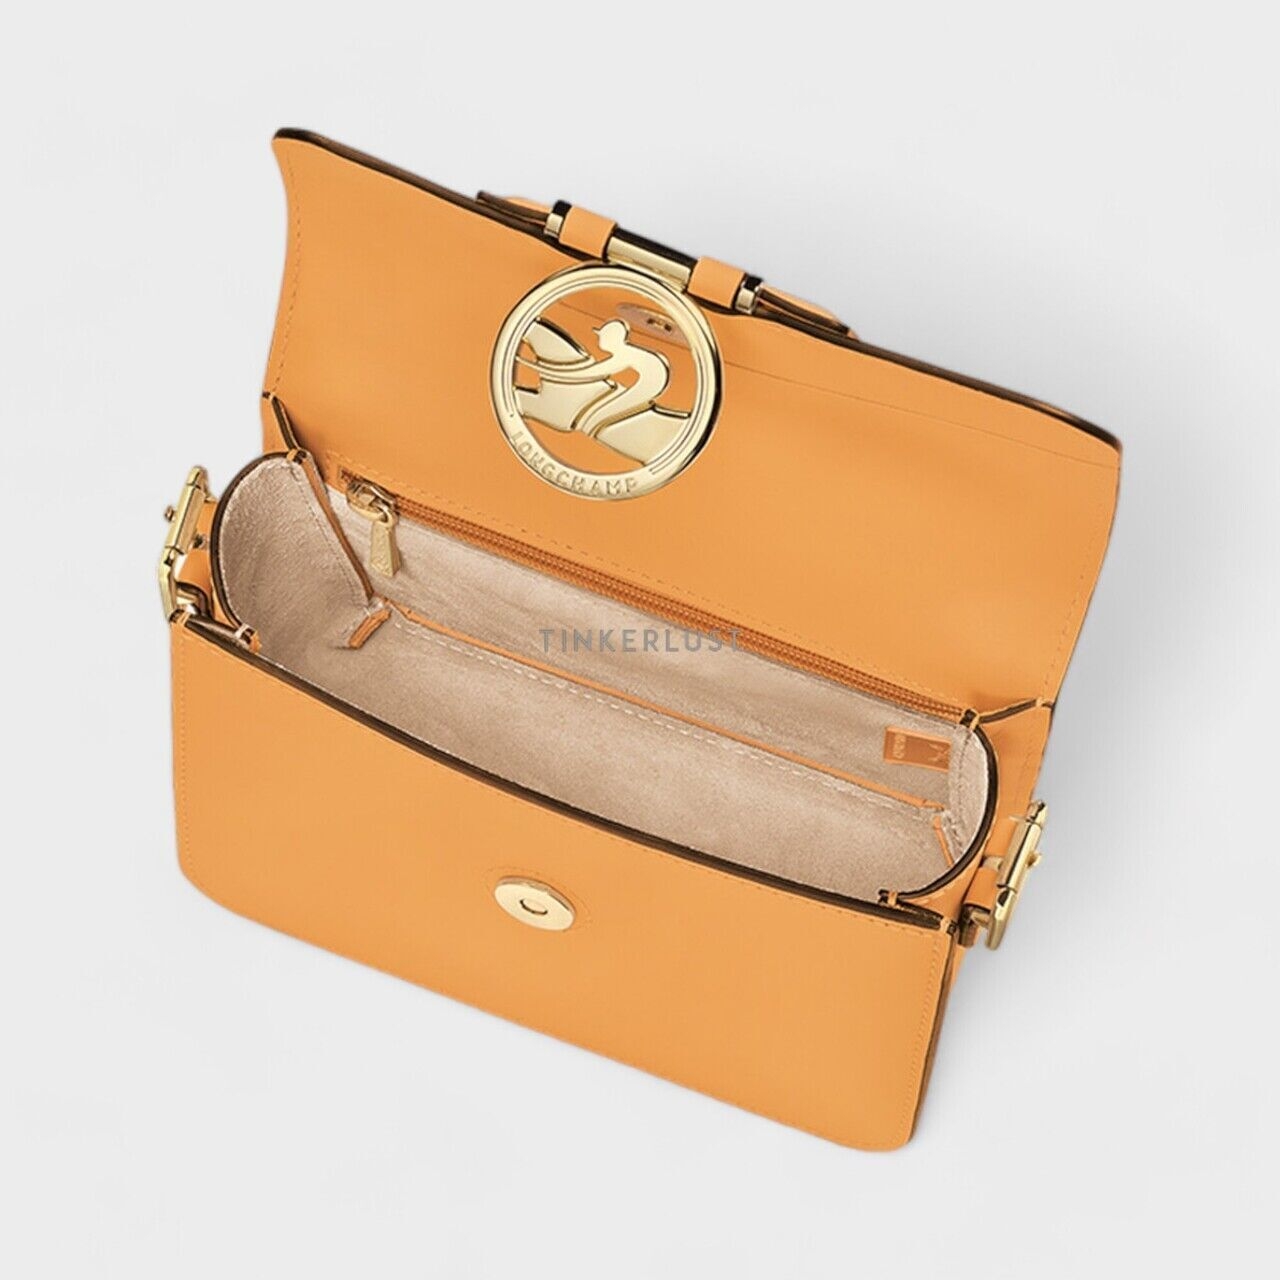 Longchamp Small Box Trot in Apricot Crossbody Bag